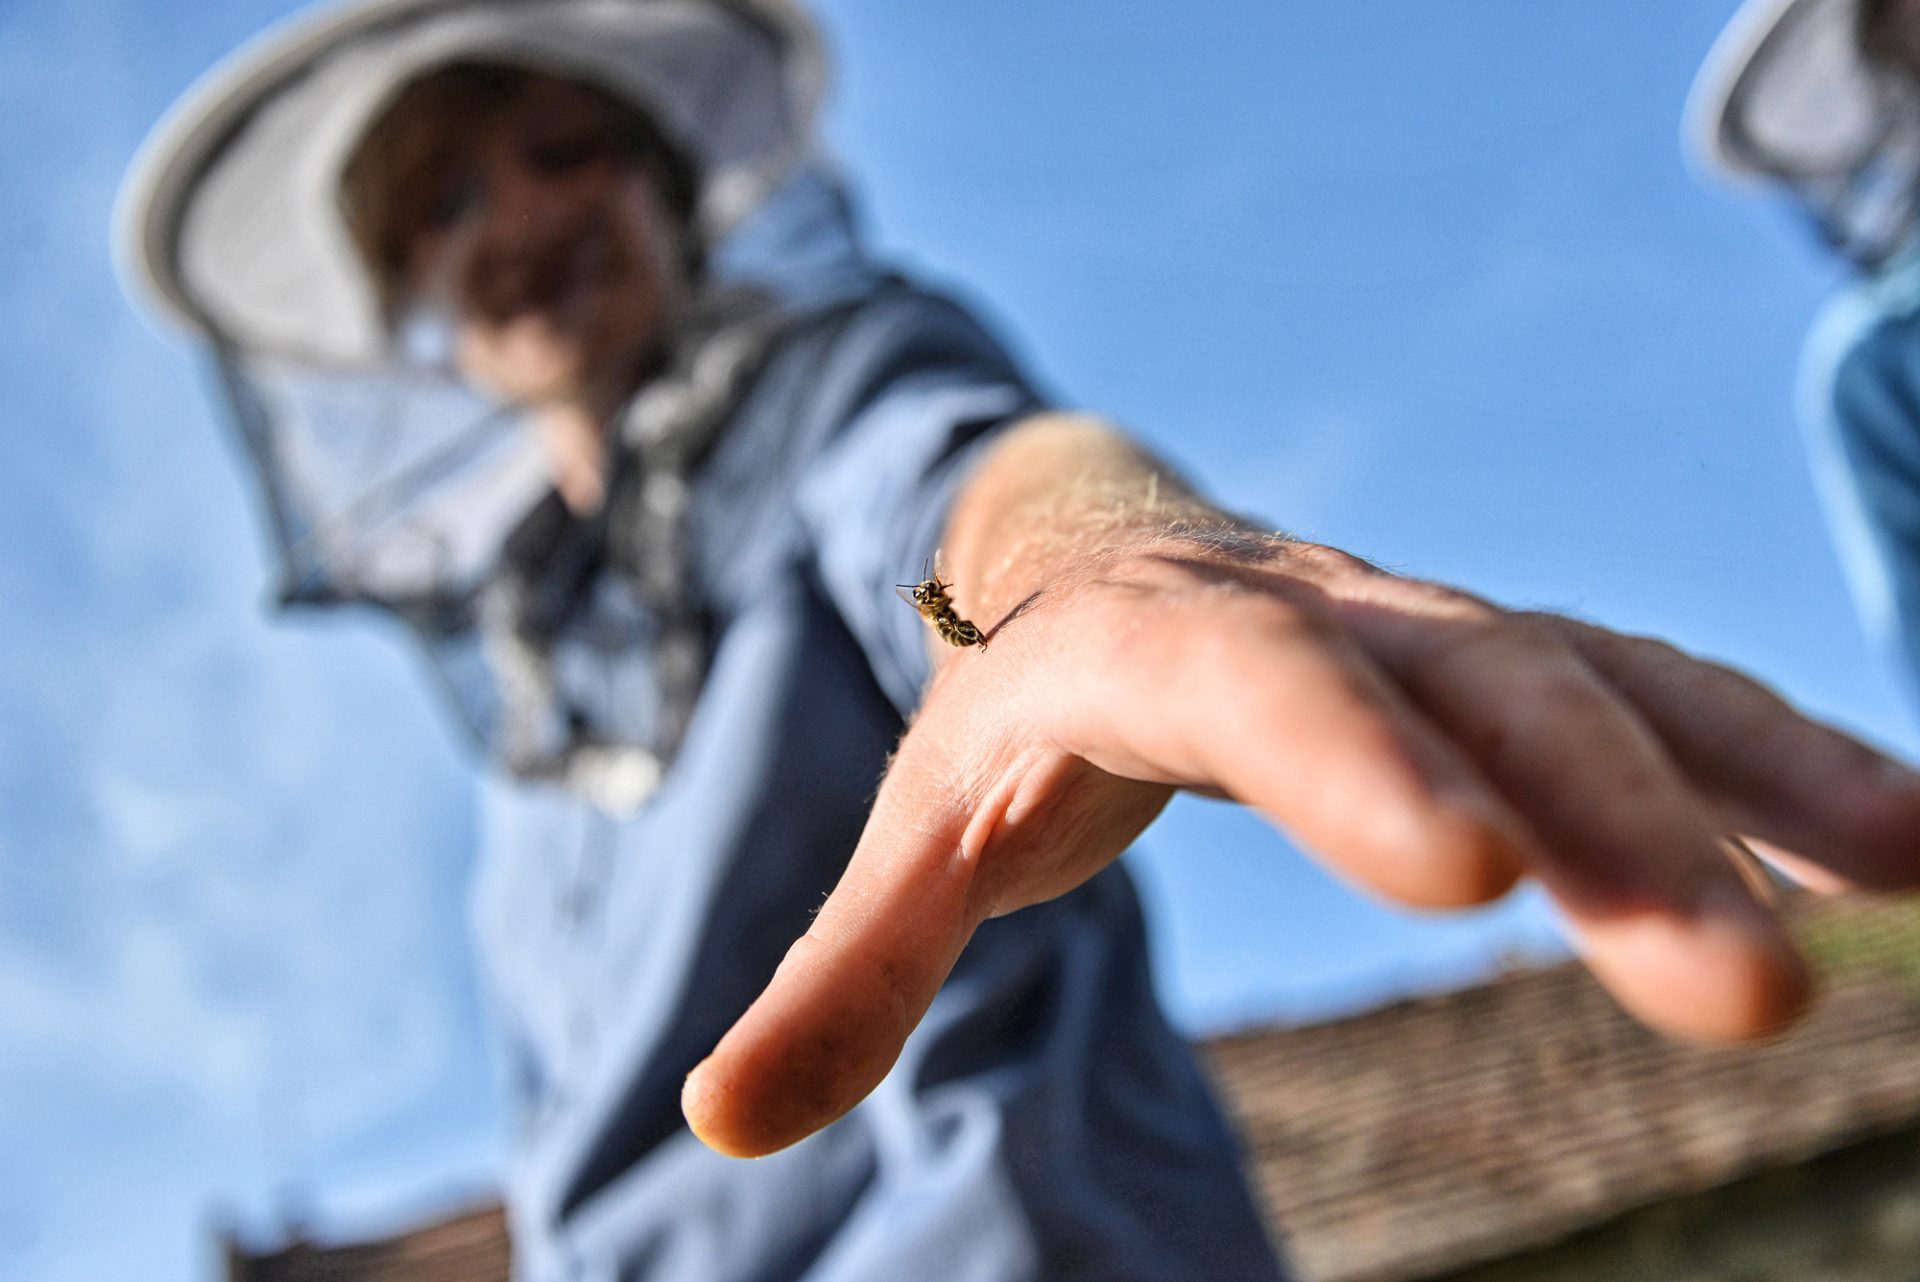 Bee Stings - Beekeeper is stung by bee in his hand.